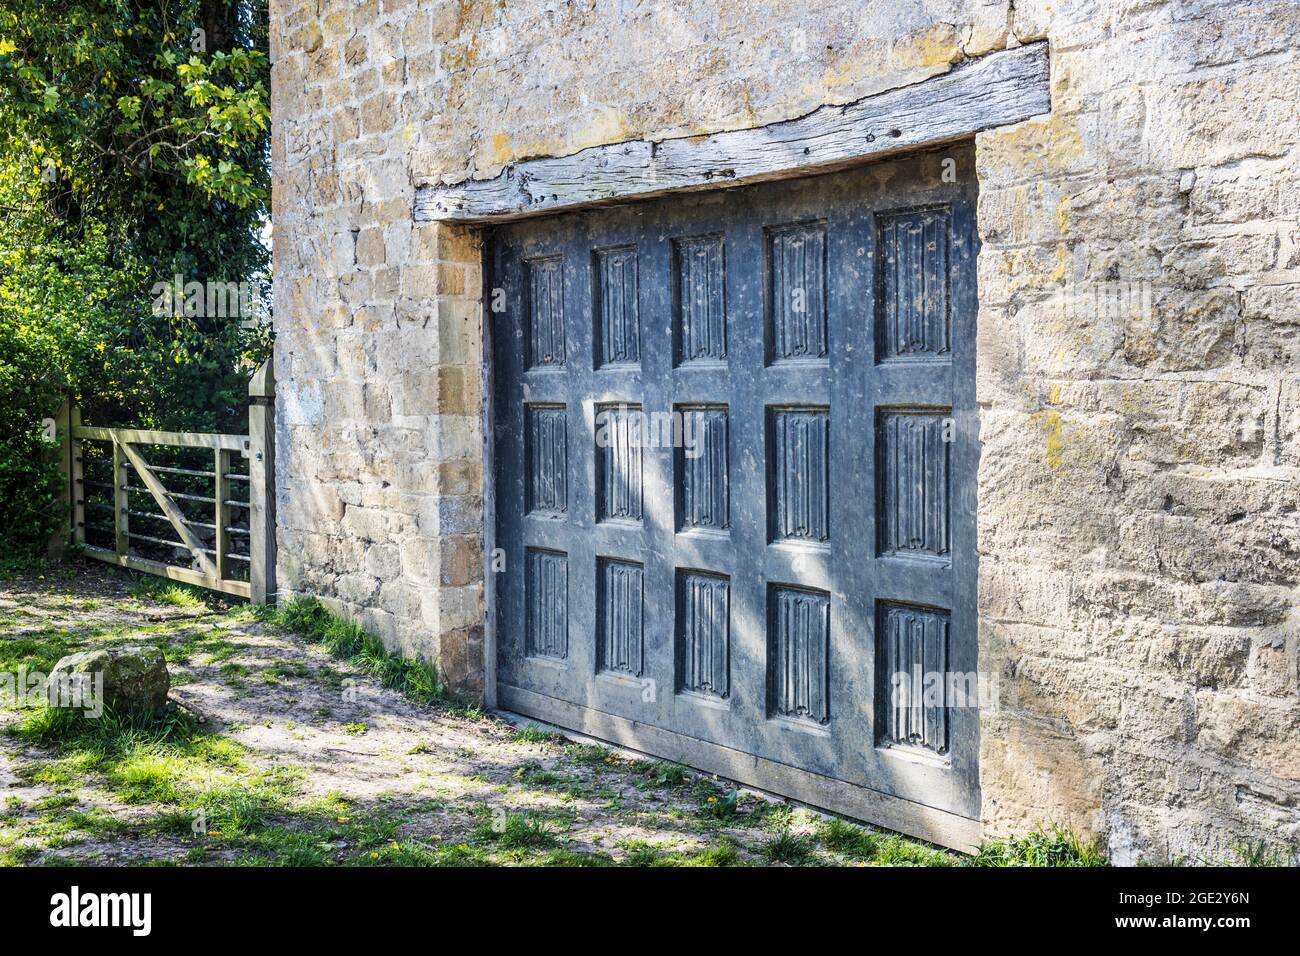 An unusual old, wooden barn door. Stock Photo